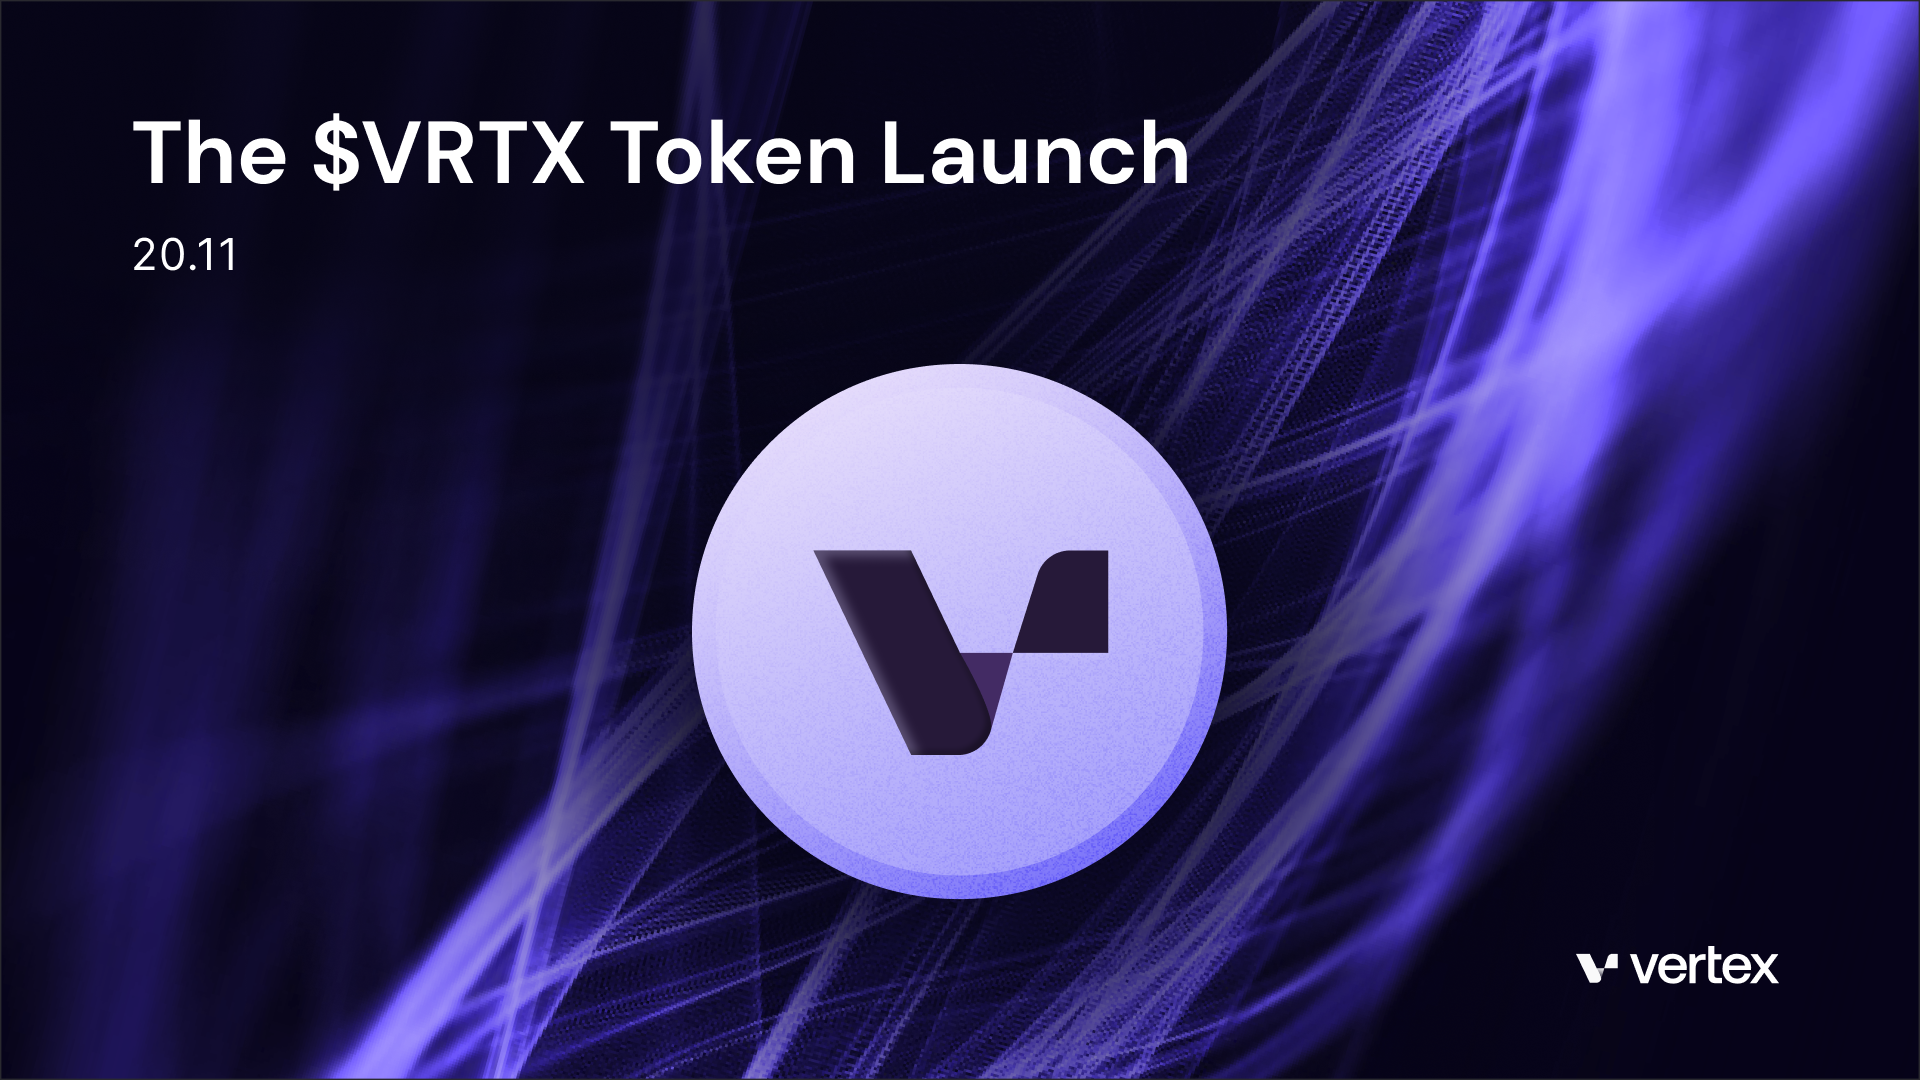 The VRTX Token Launch